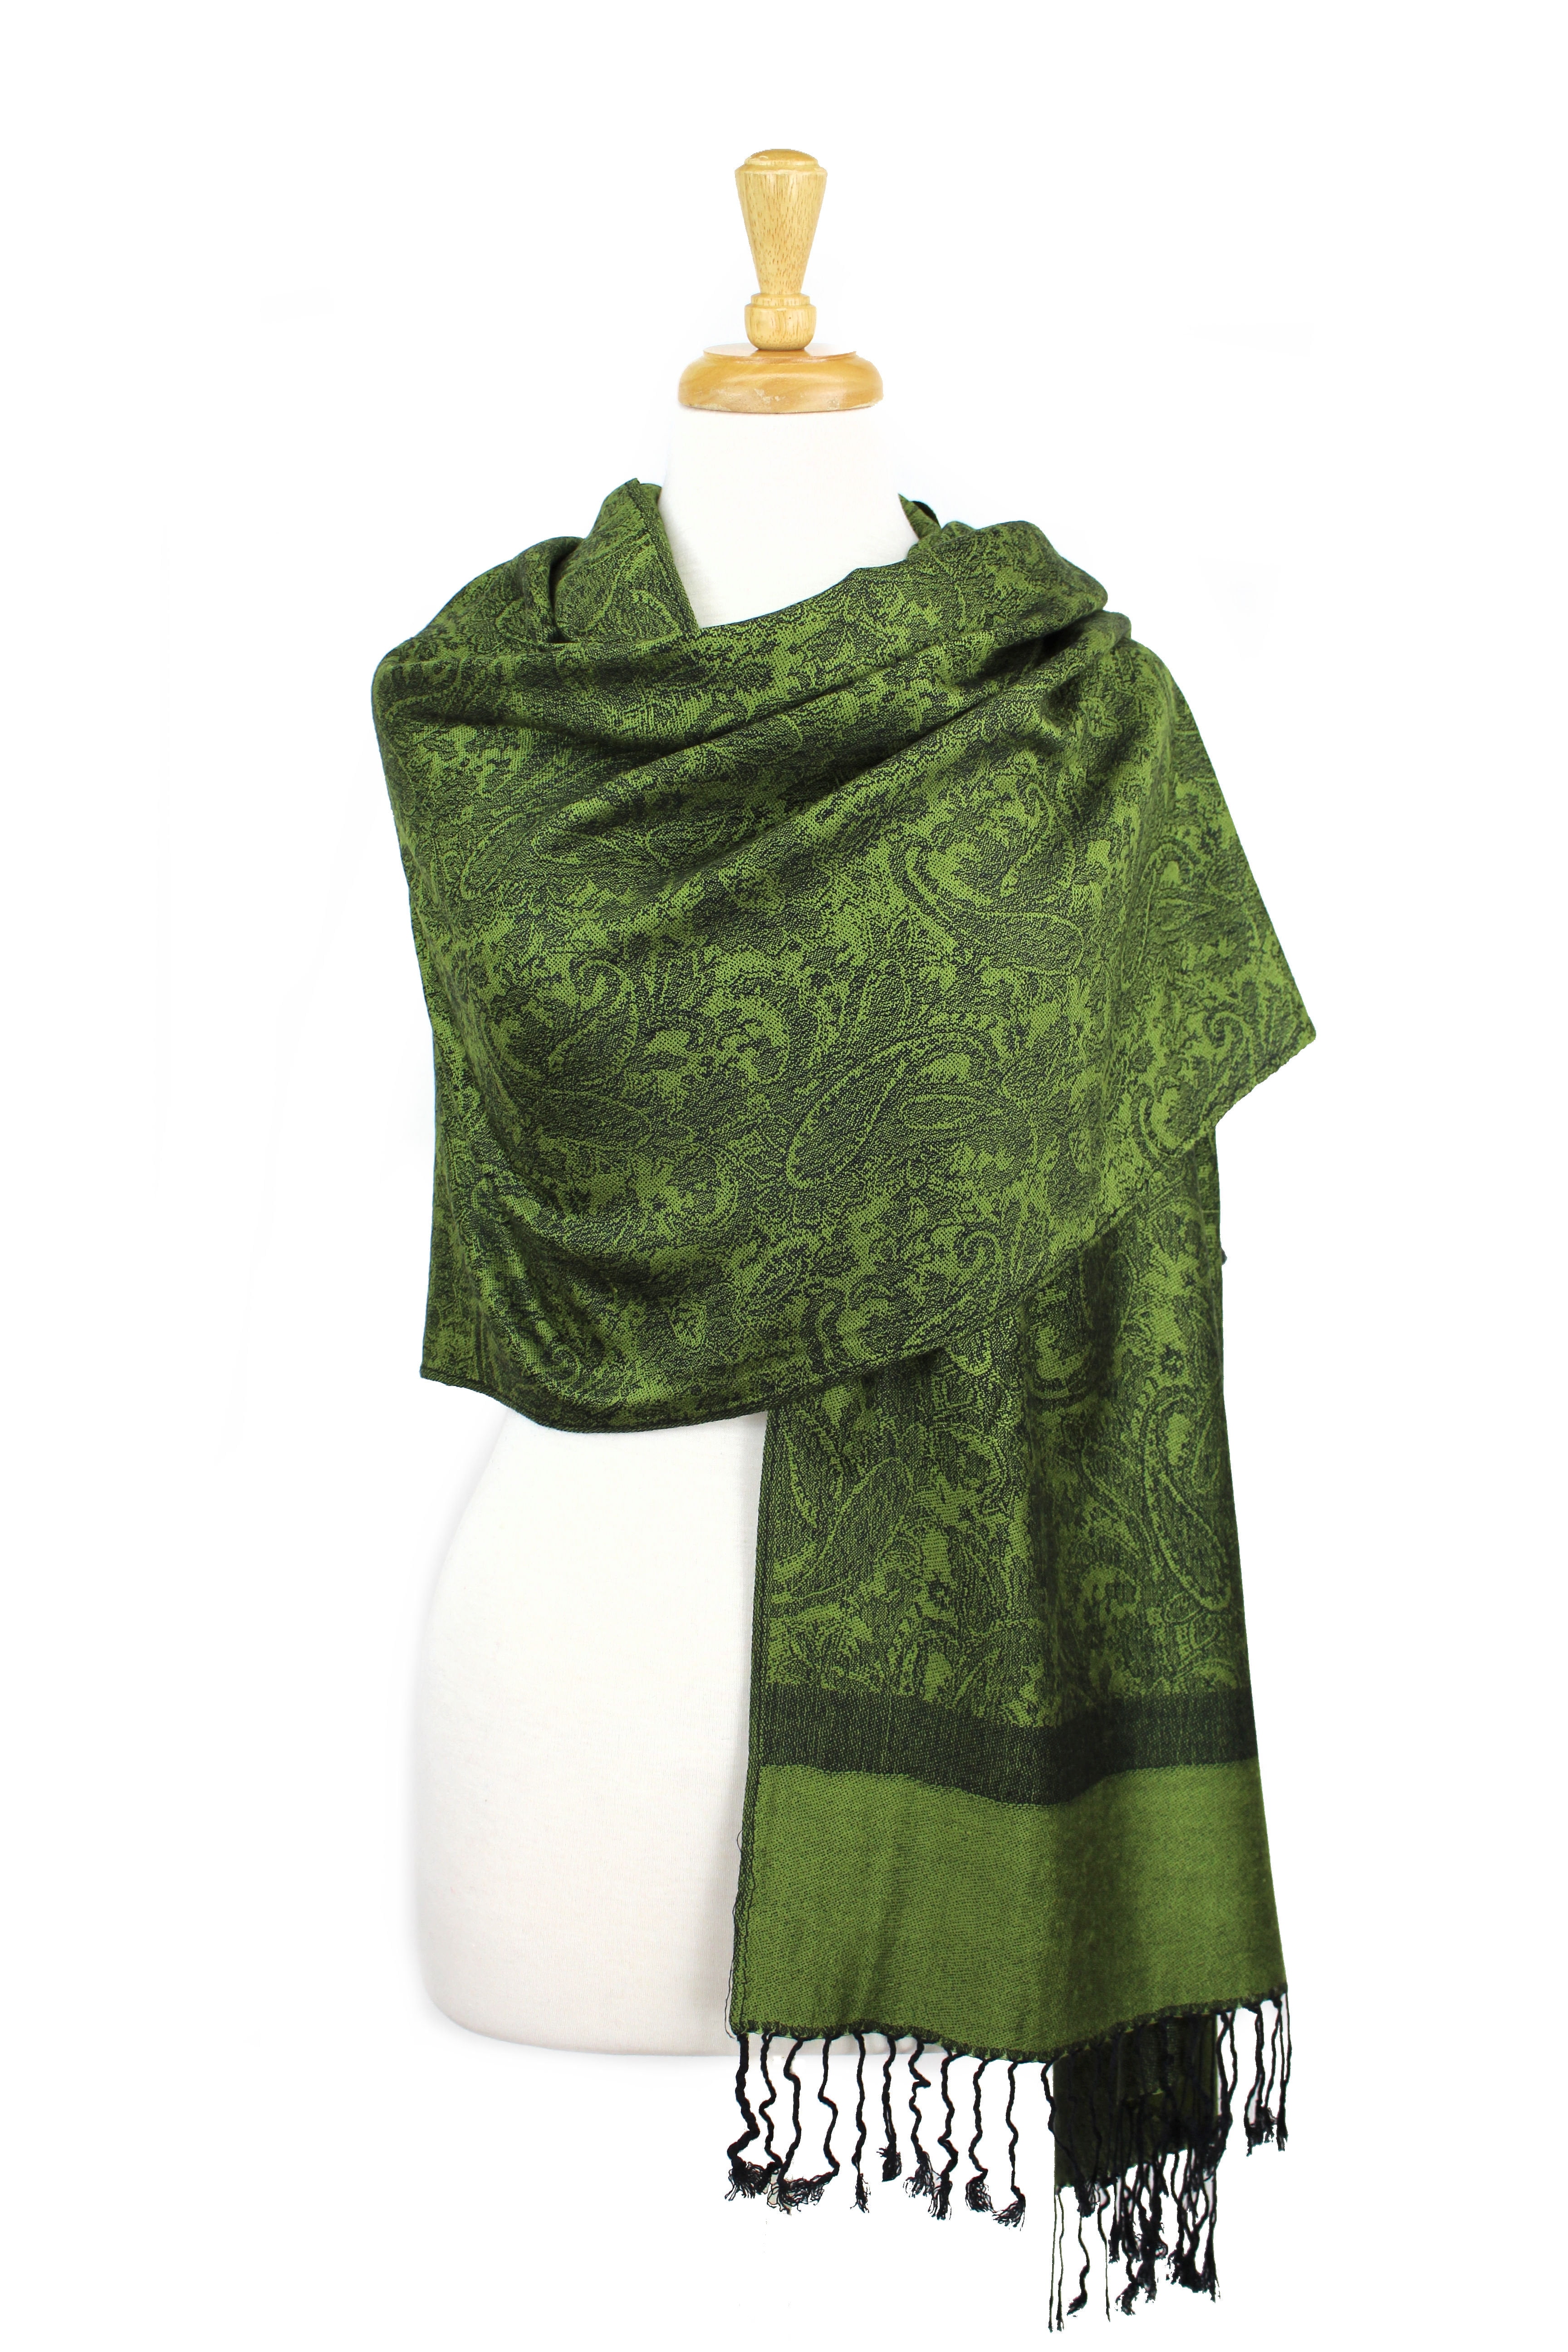 US SELLER-12pcs pashmina paisley shawl scarf pashmina shawl scarf 